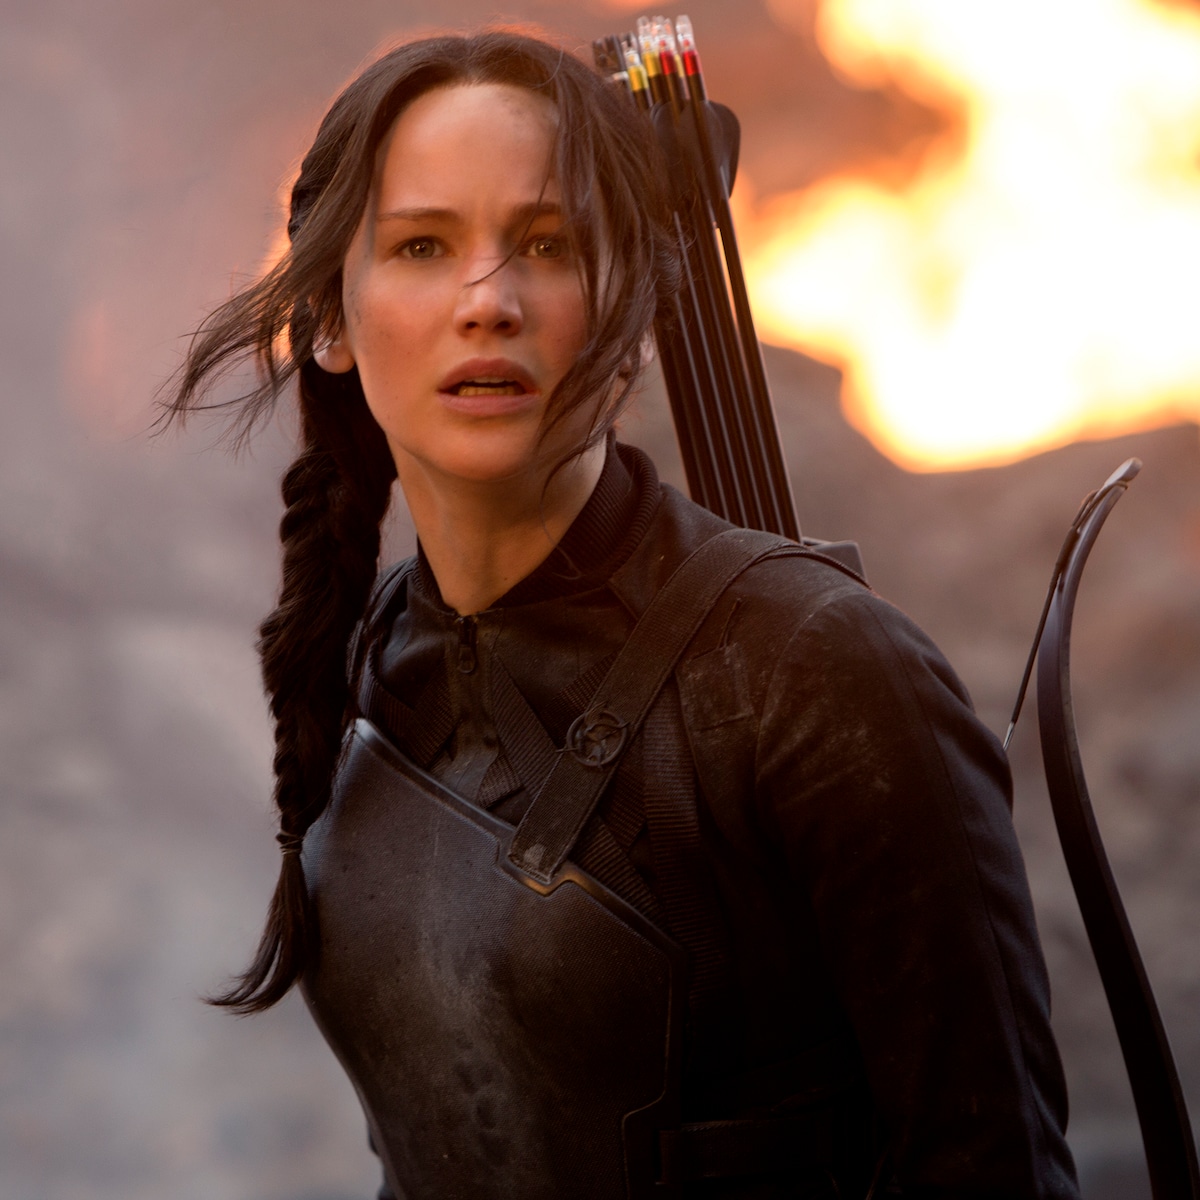 The Hunger Games: Mockingjay -- Part 2' is still No. 1 at the box